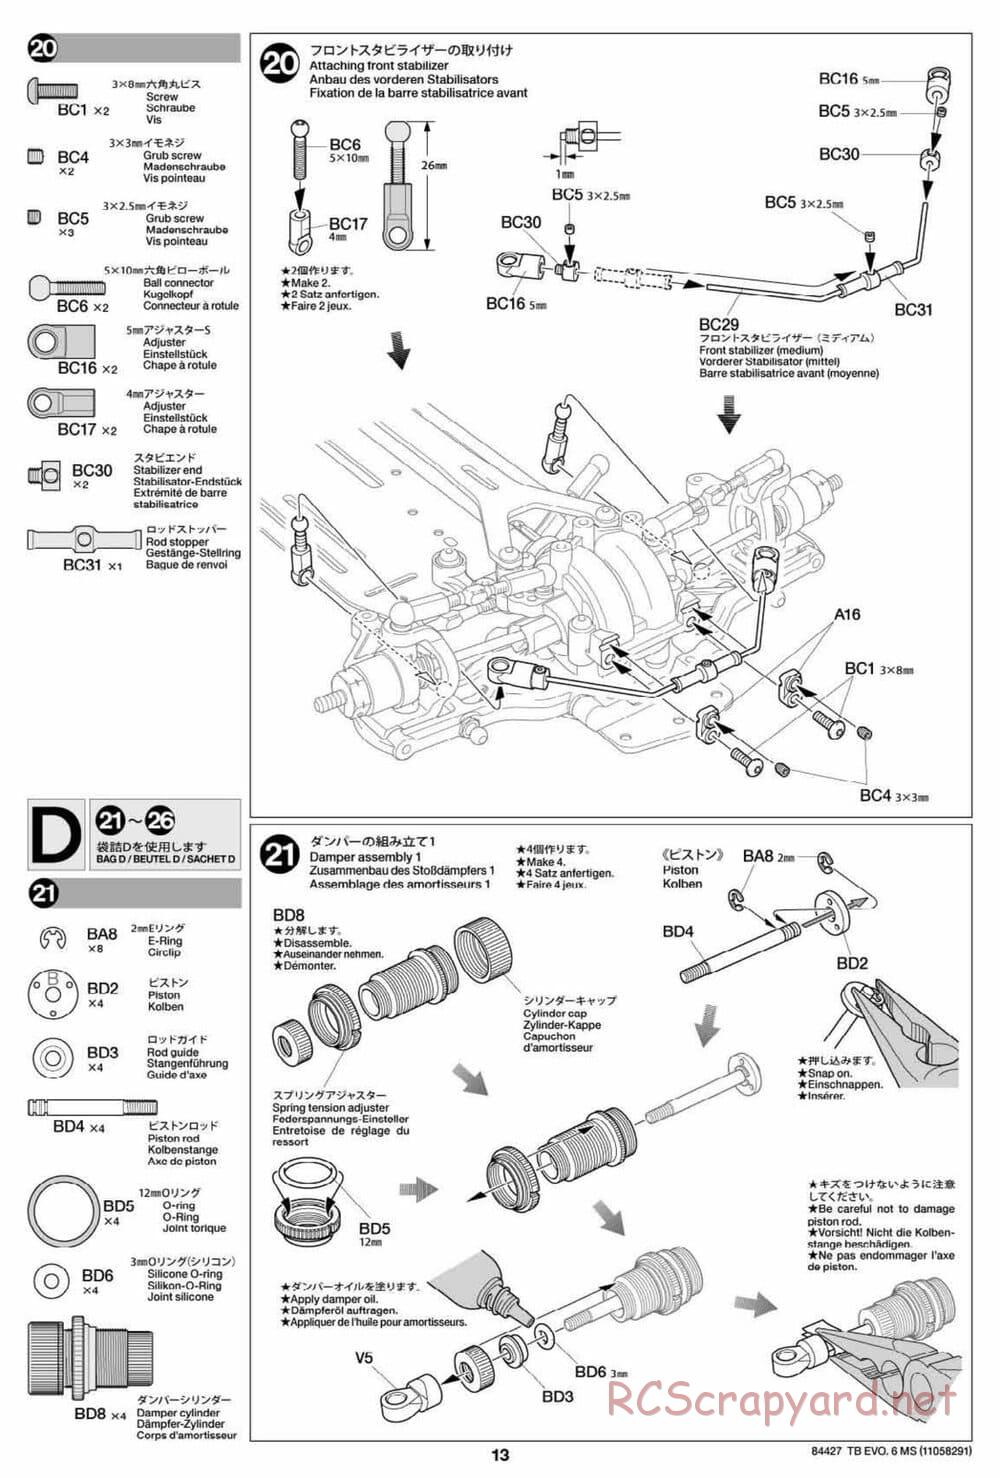 Tamiya - TB Evo.6 MS Chassis - Manual - Page 13